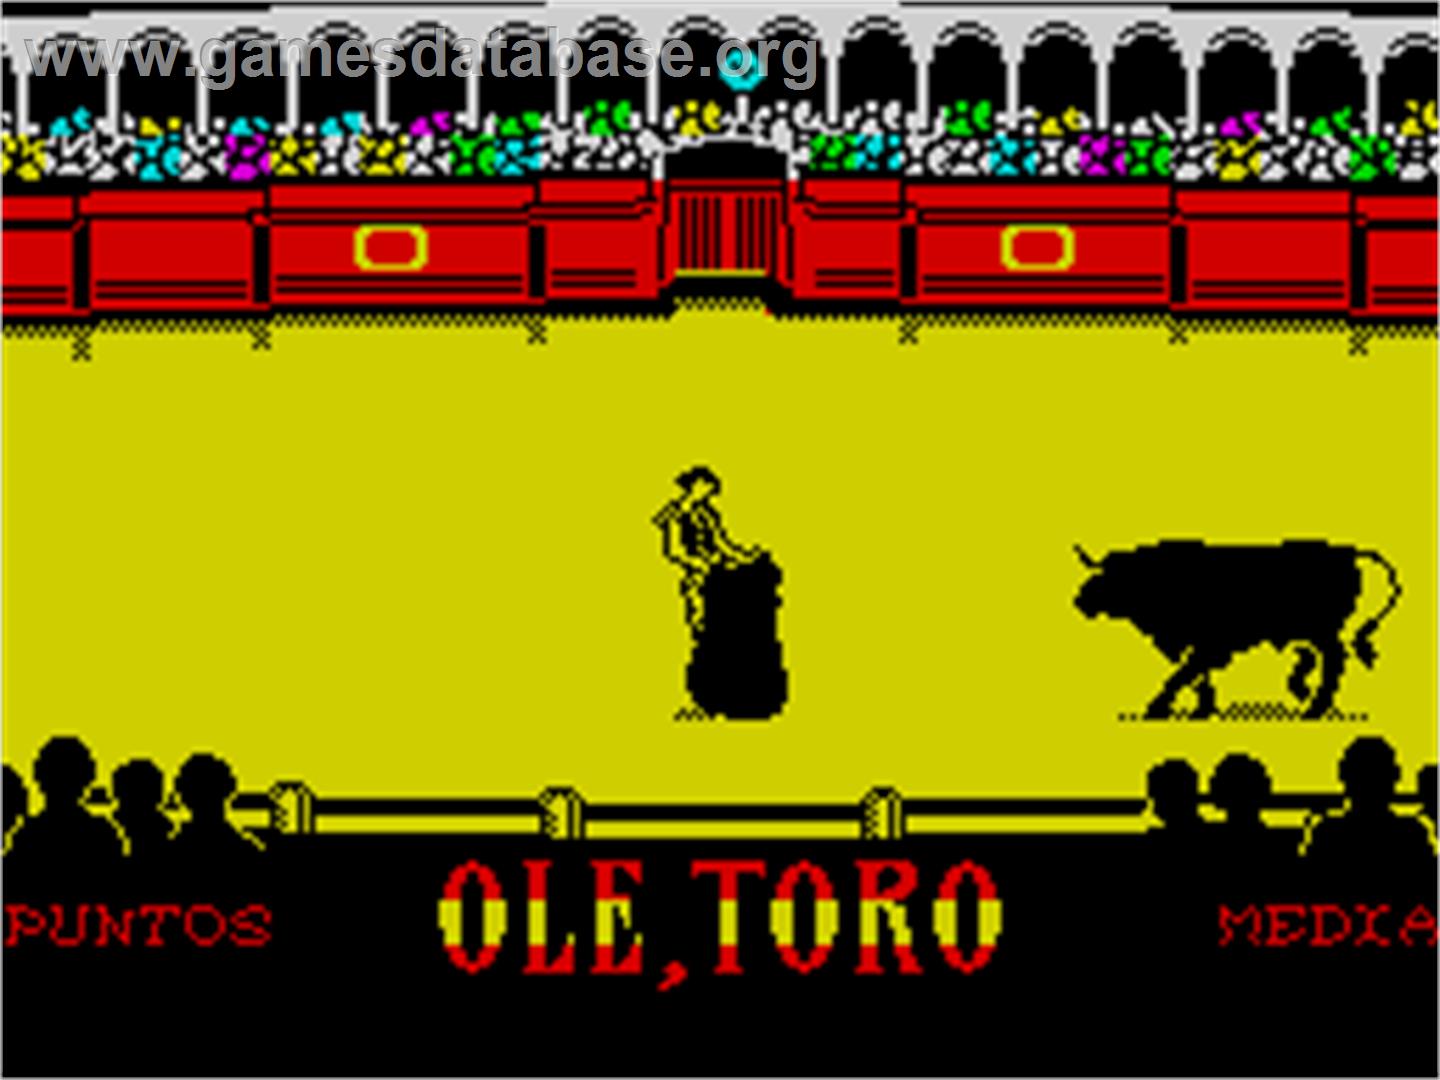 Olé, Toro - Sinclair ZX Spectrum - Artwork - In Game